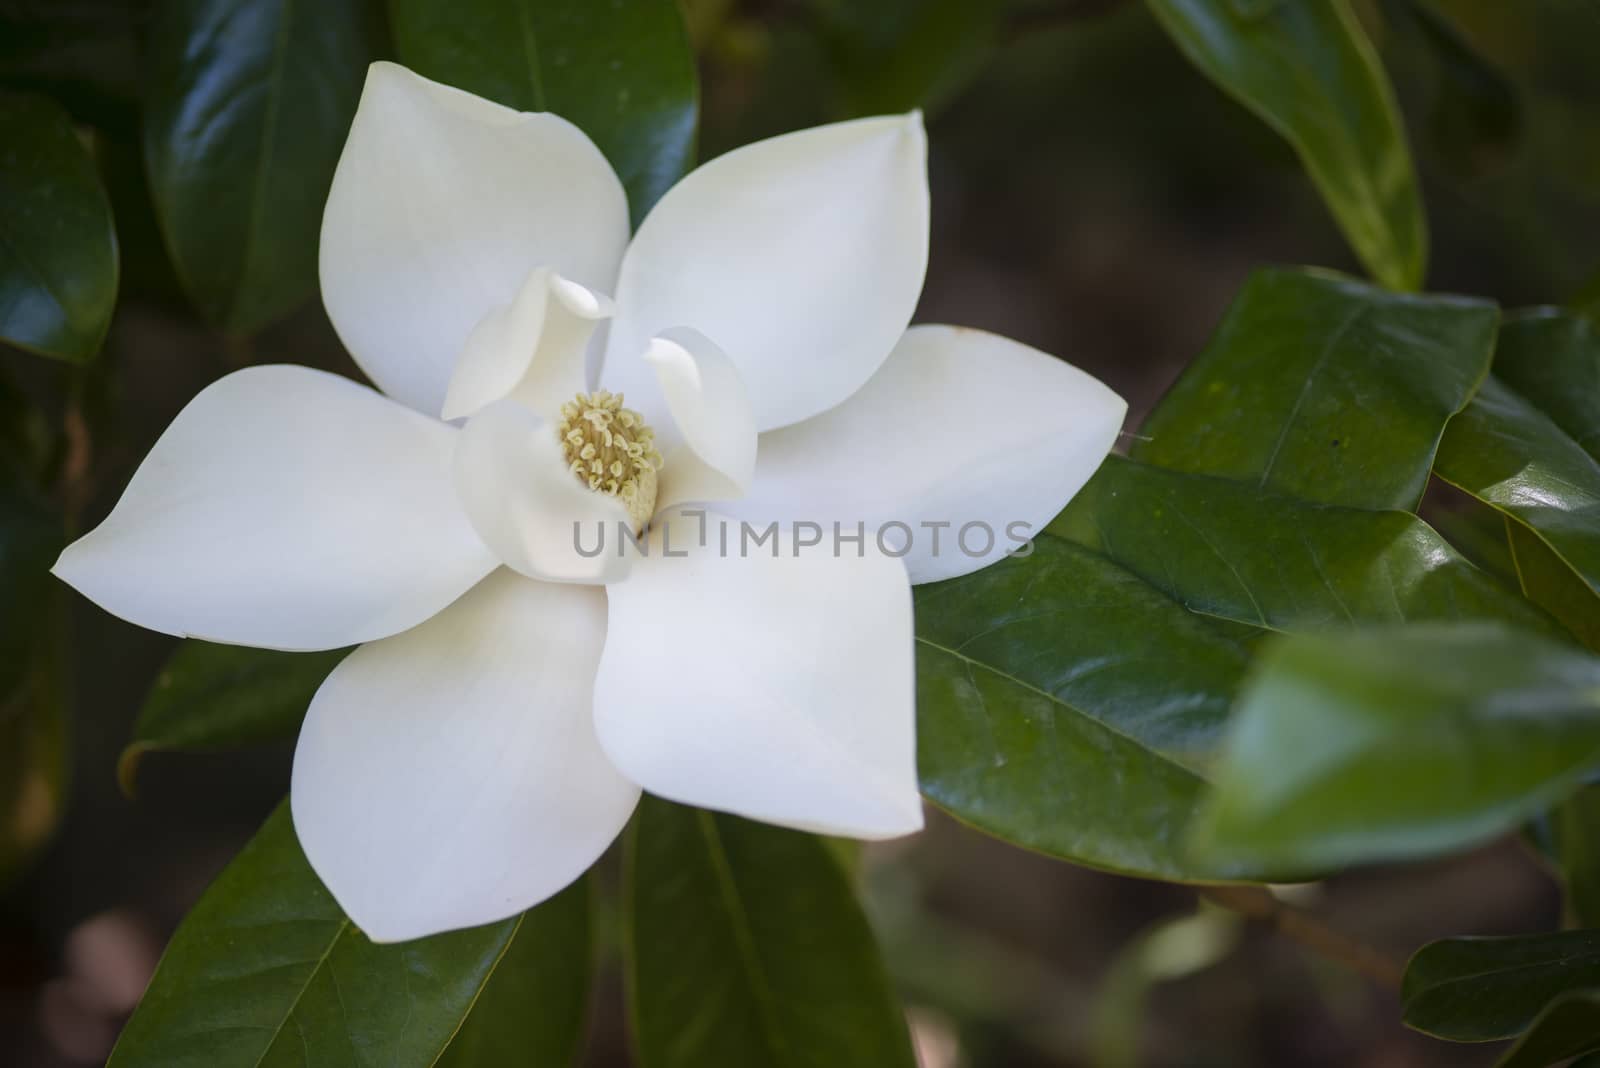 Detail of white flower, suthern magnolia grandiflora tree